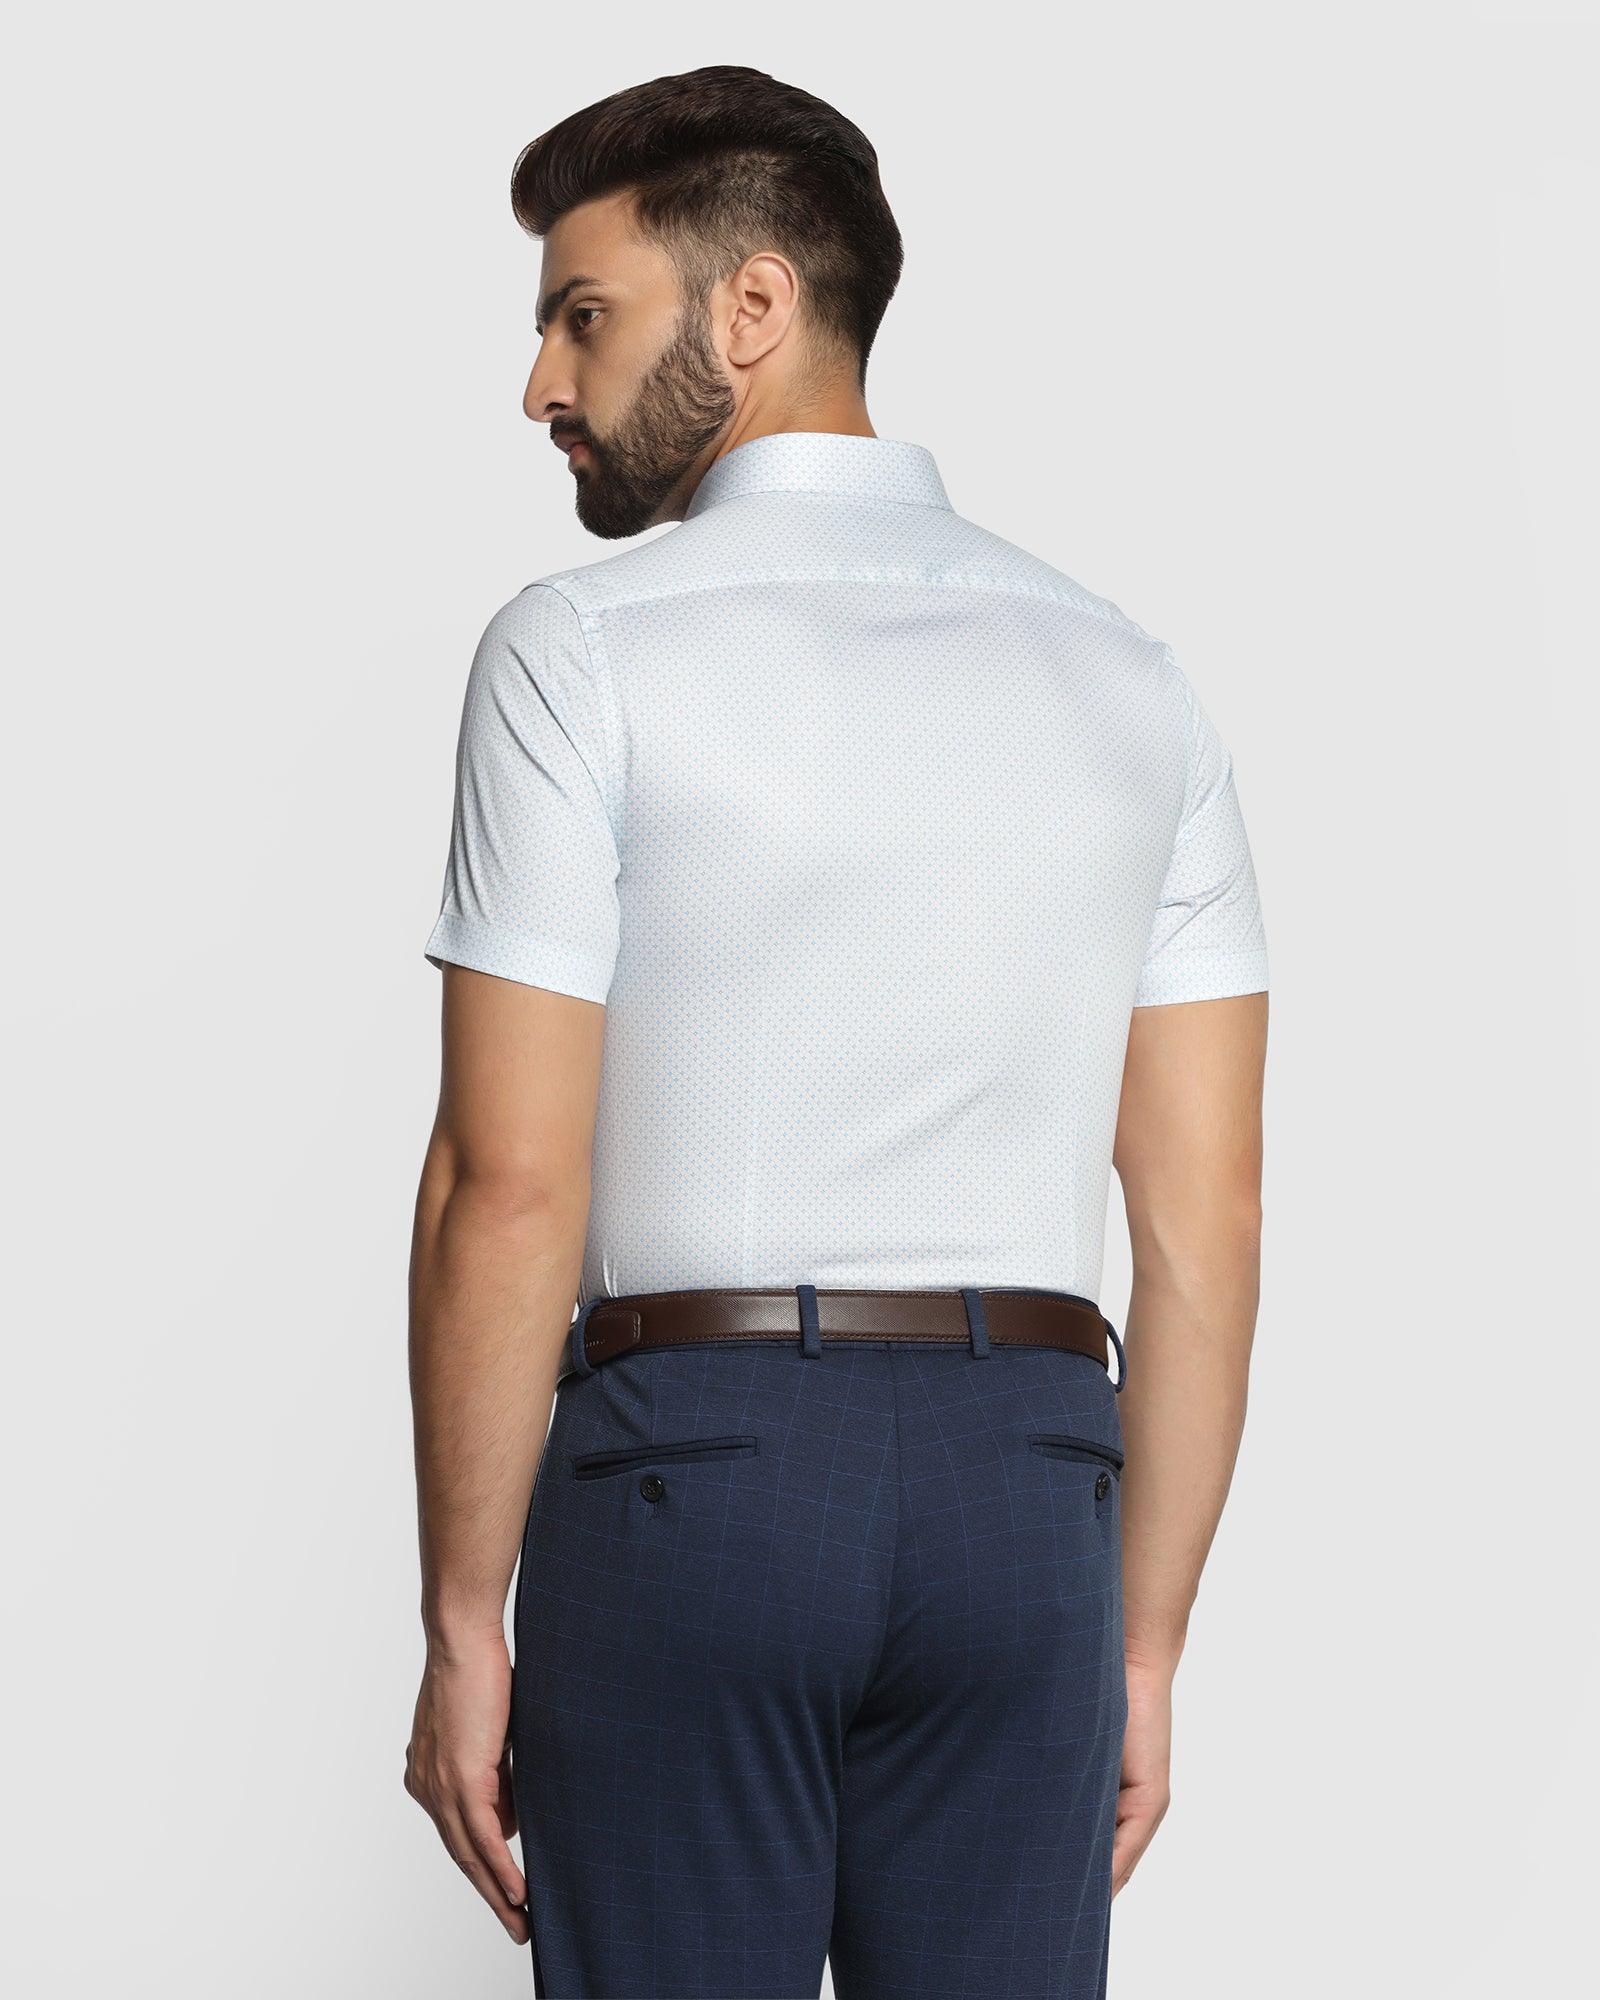 Formal Half Sleeve White Printed Shirt - Nate